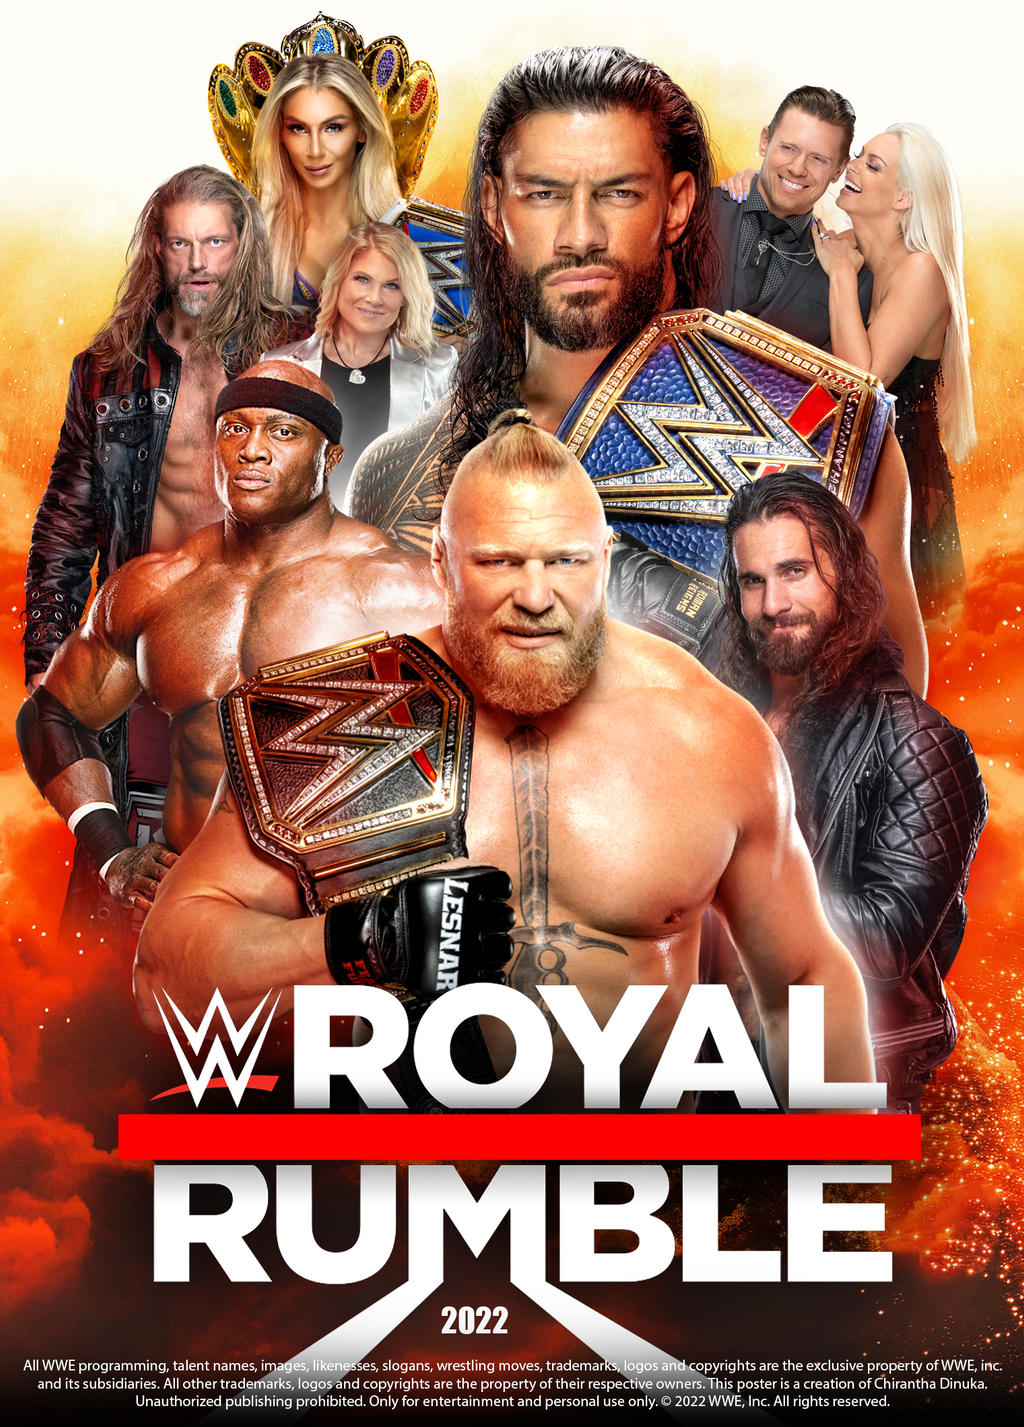 Watch WWE Royal Rumble (2022) HDRip (HDTV) English Full Movie Online Free